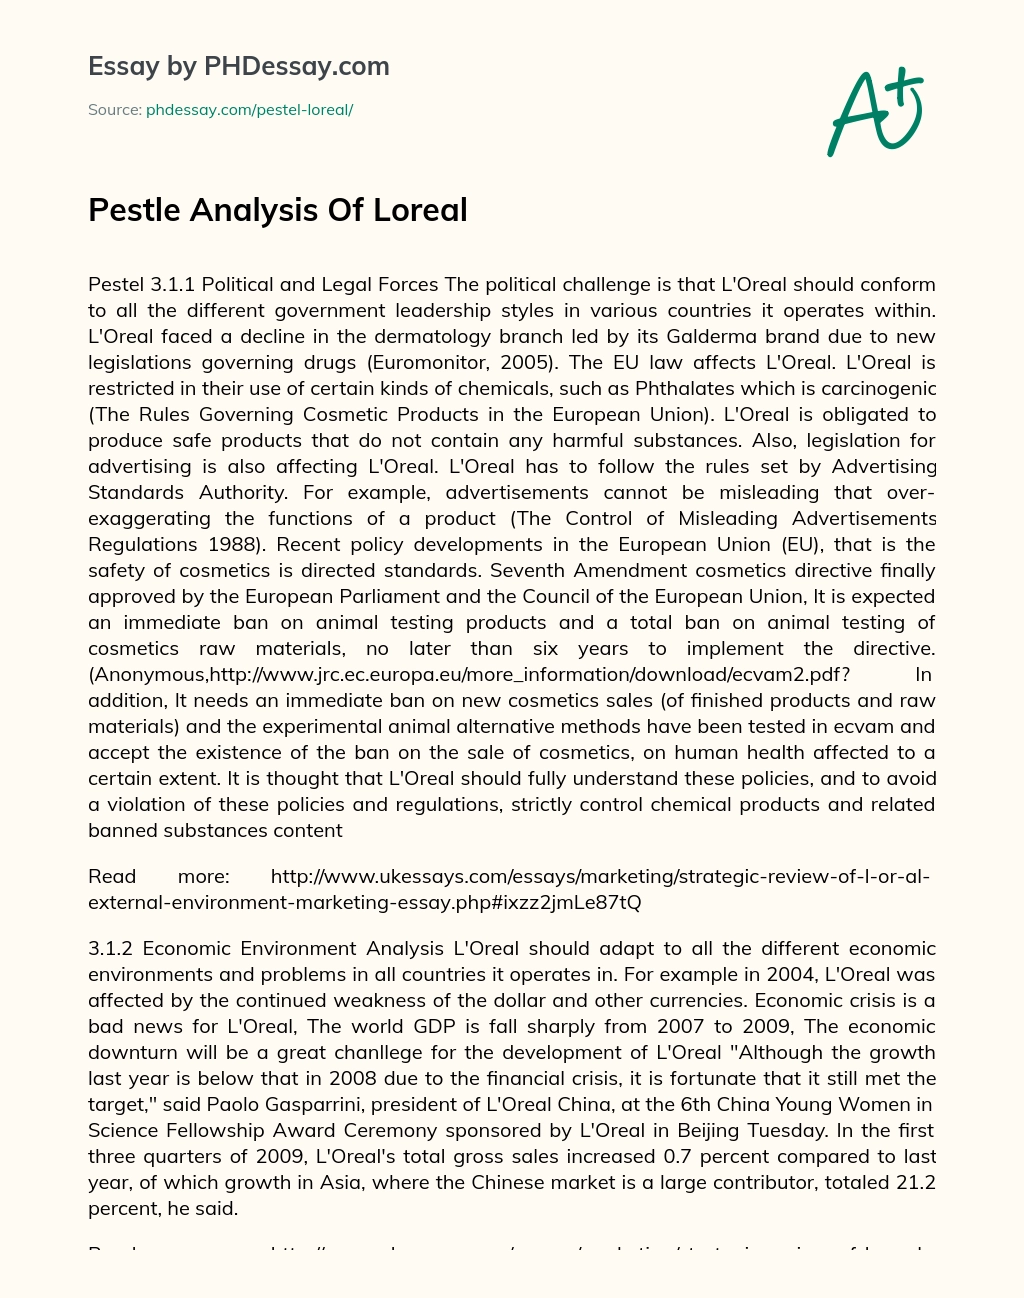 Pestle Analysis Of Loreal essay